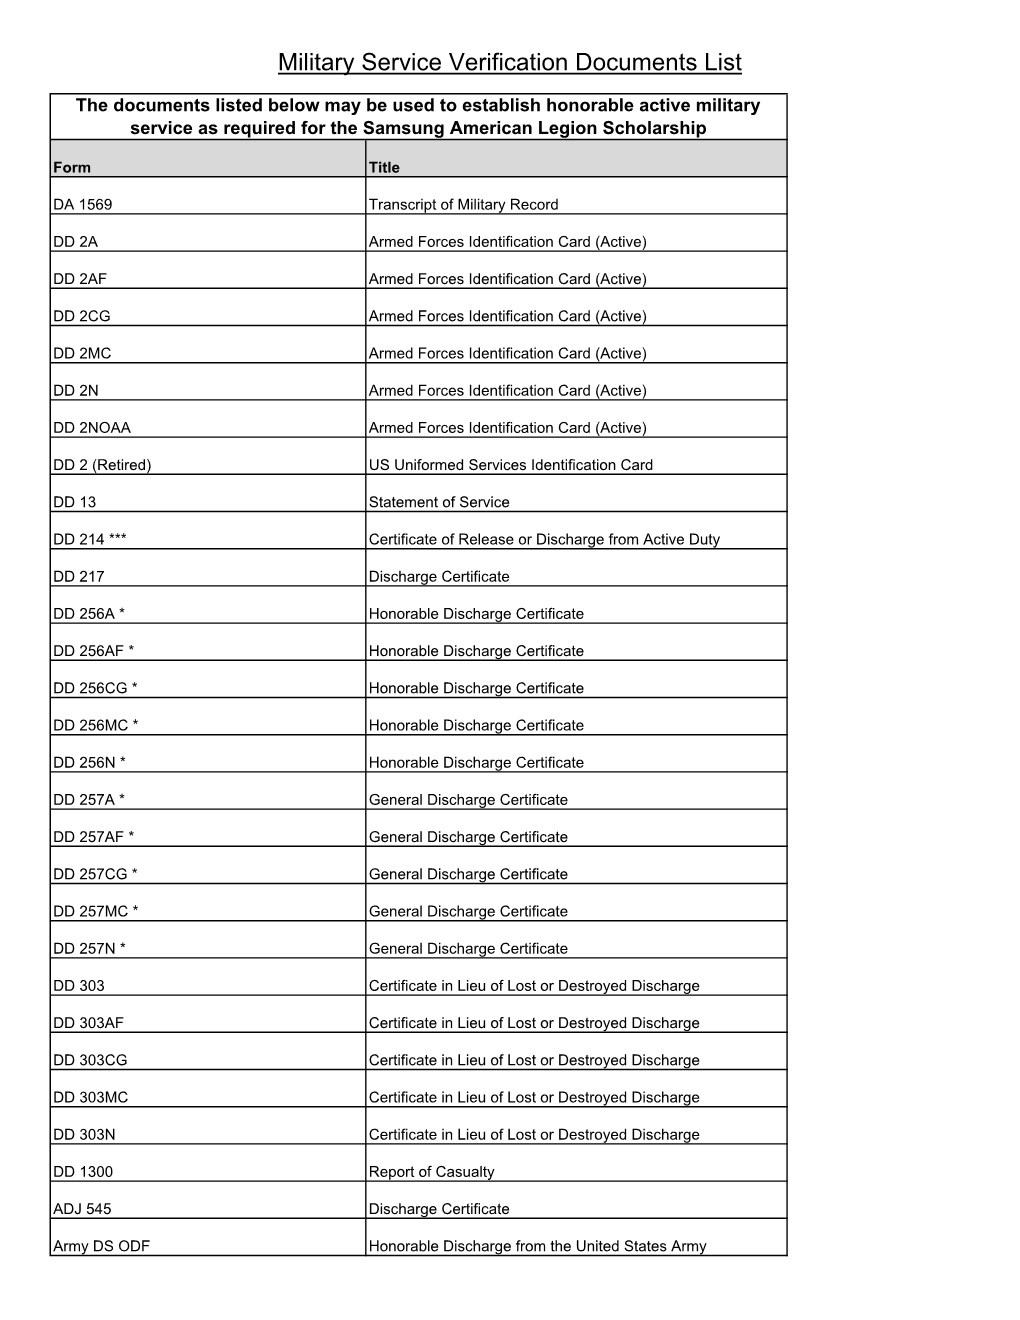 Copy of Military Service Verification Documents List